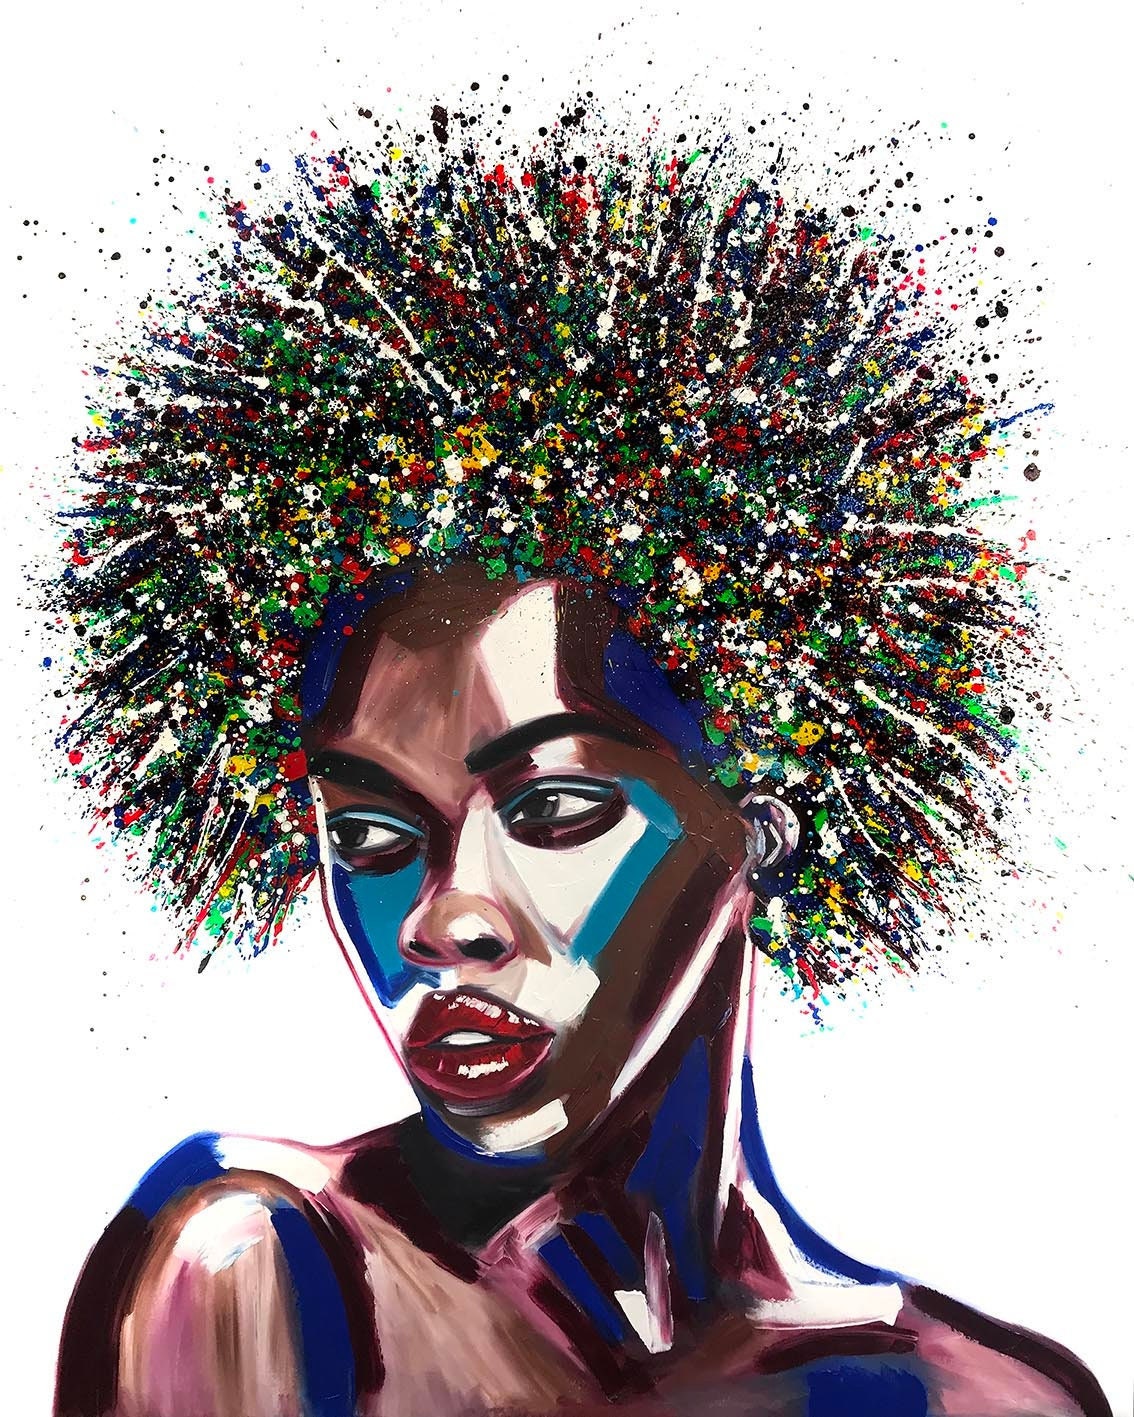 Colorful Afro Girl Art, Wall Art, Black History Celebration | Canvas Print